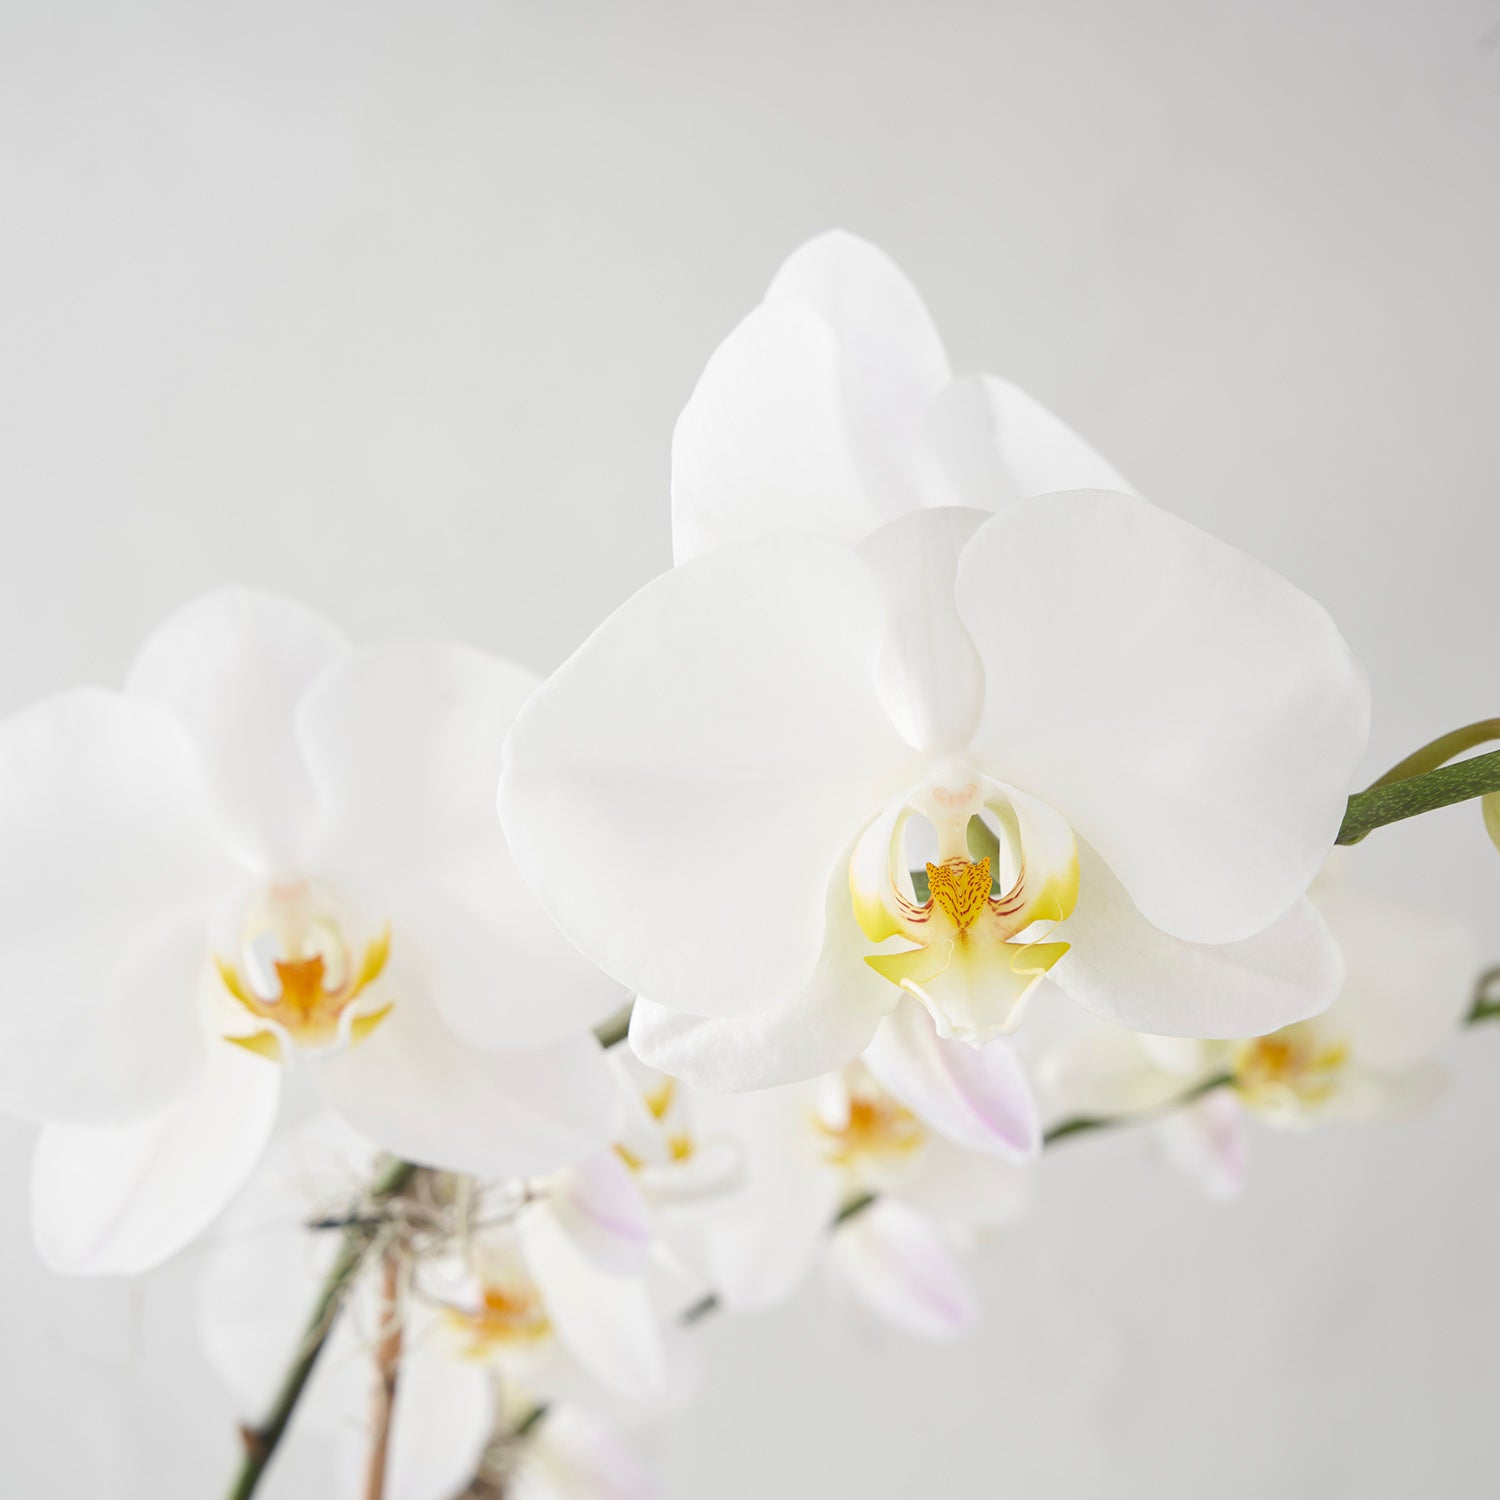 Slightly blurry image of white phalaenopsis orchid flowers on white background.